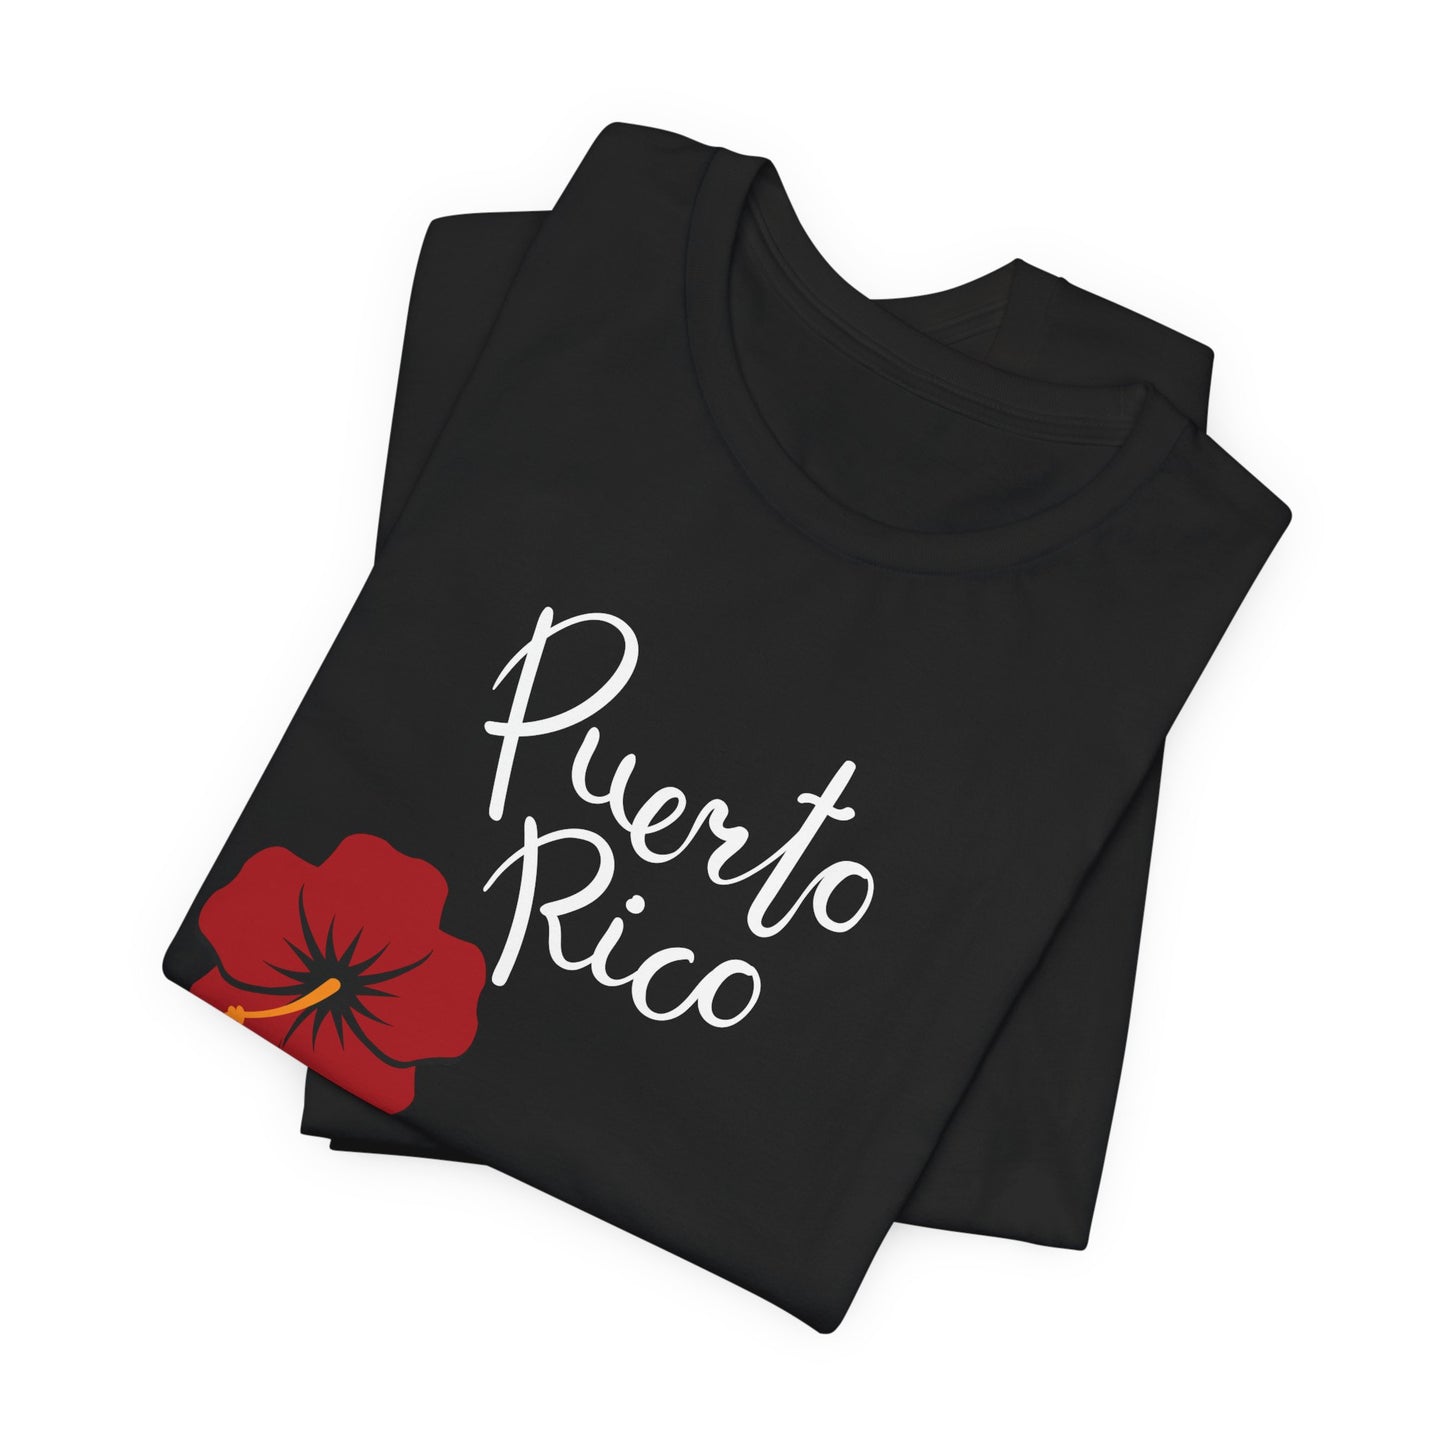 LASHES AND FLOWER PUERTO RICO BORICUA Shirt 4everBoricua™️